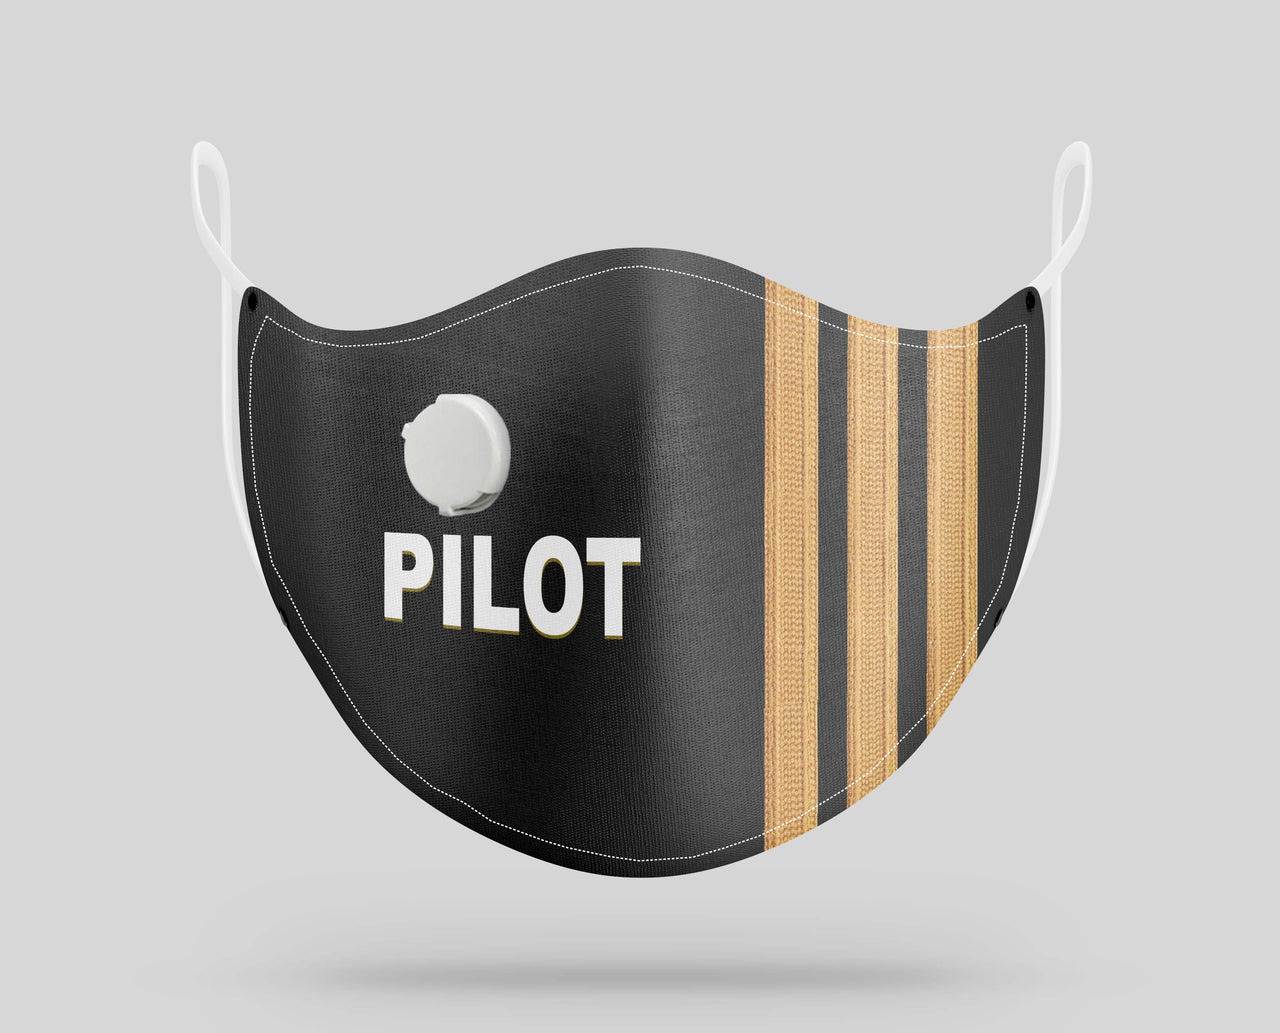 Special Edition Pilot & Stripes Designed Face Masks